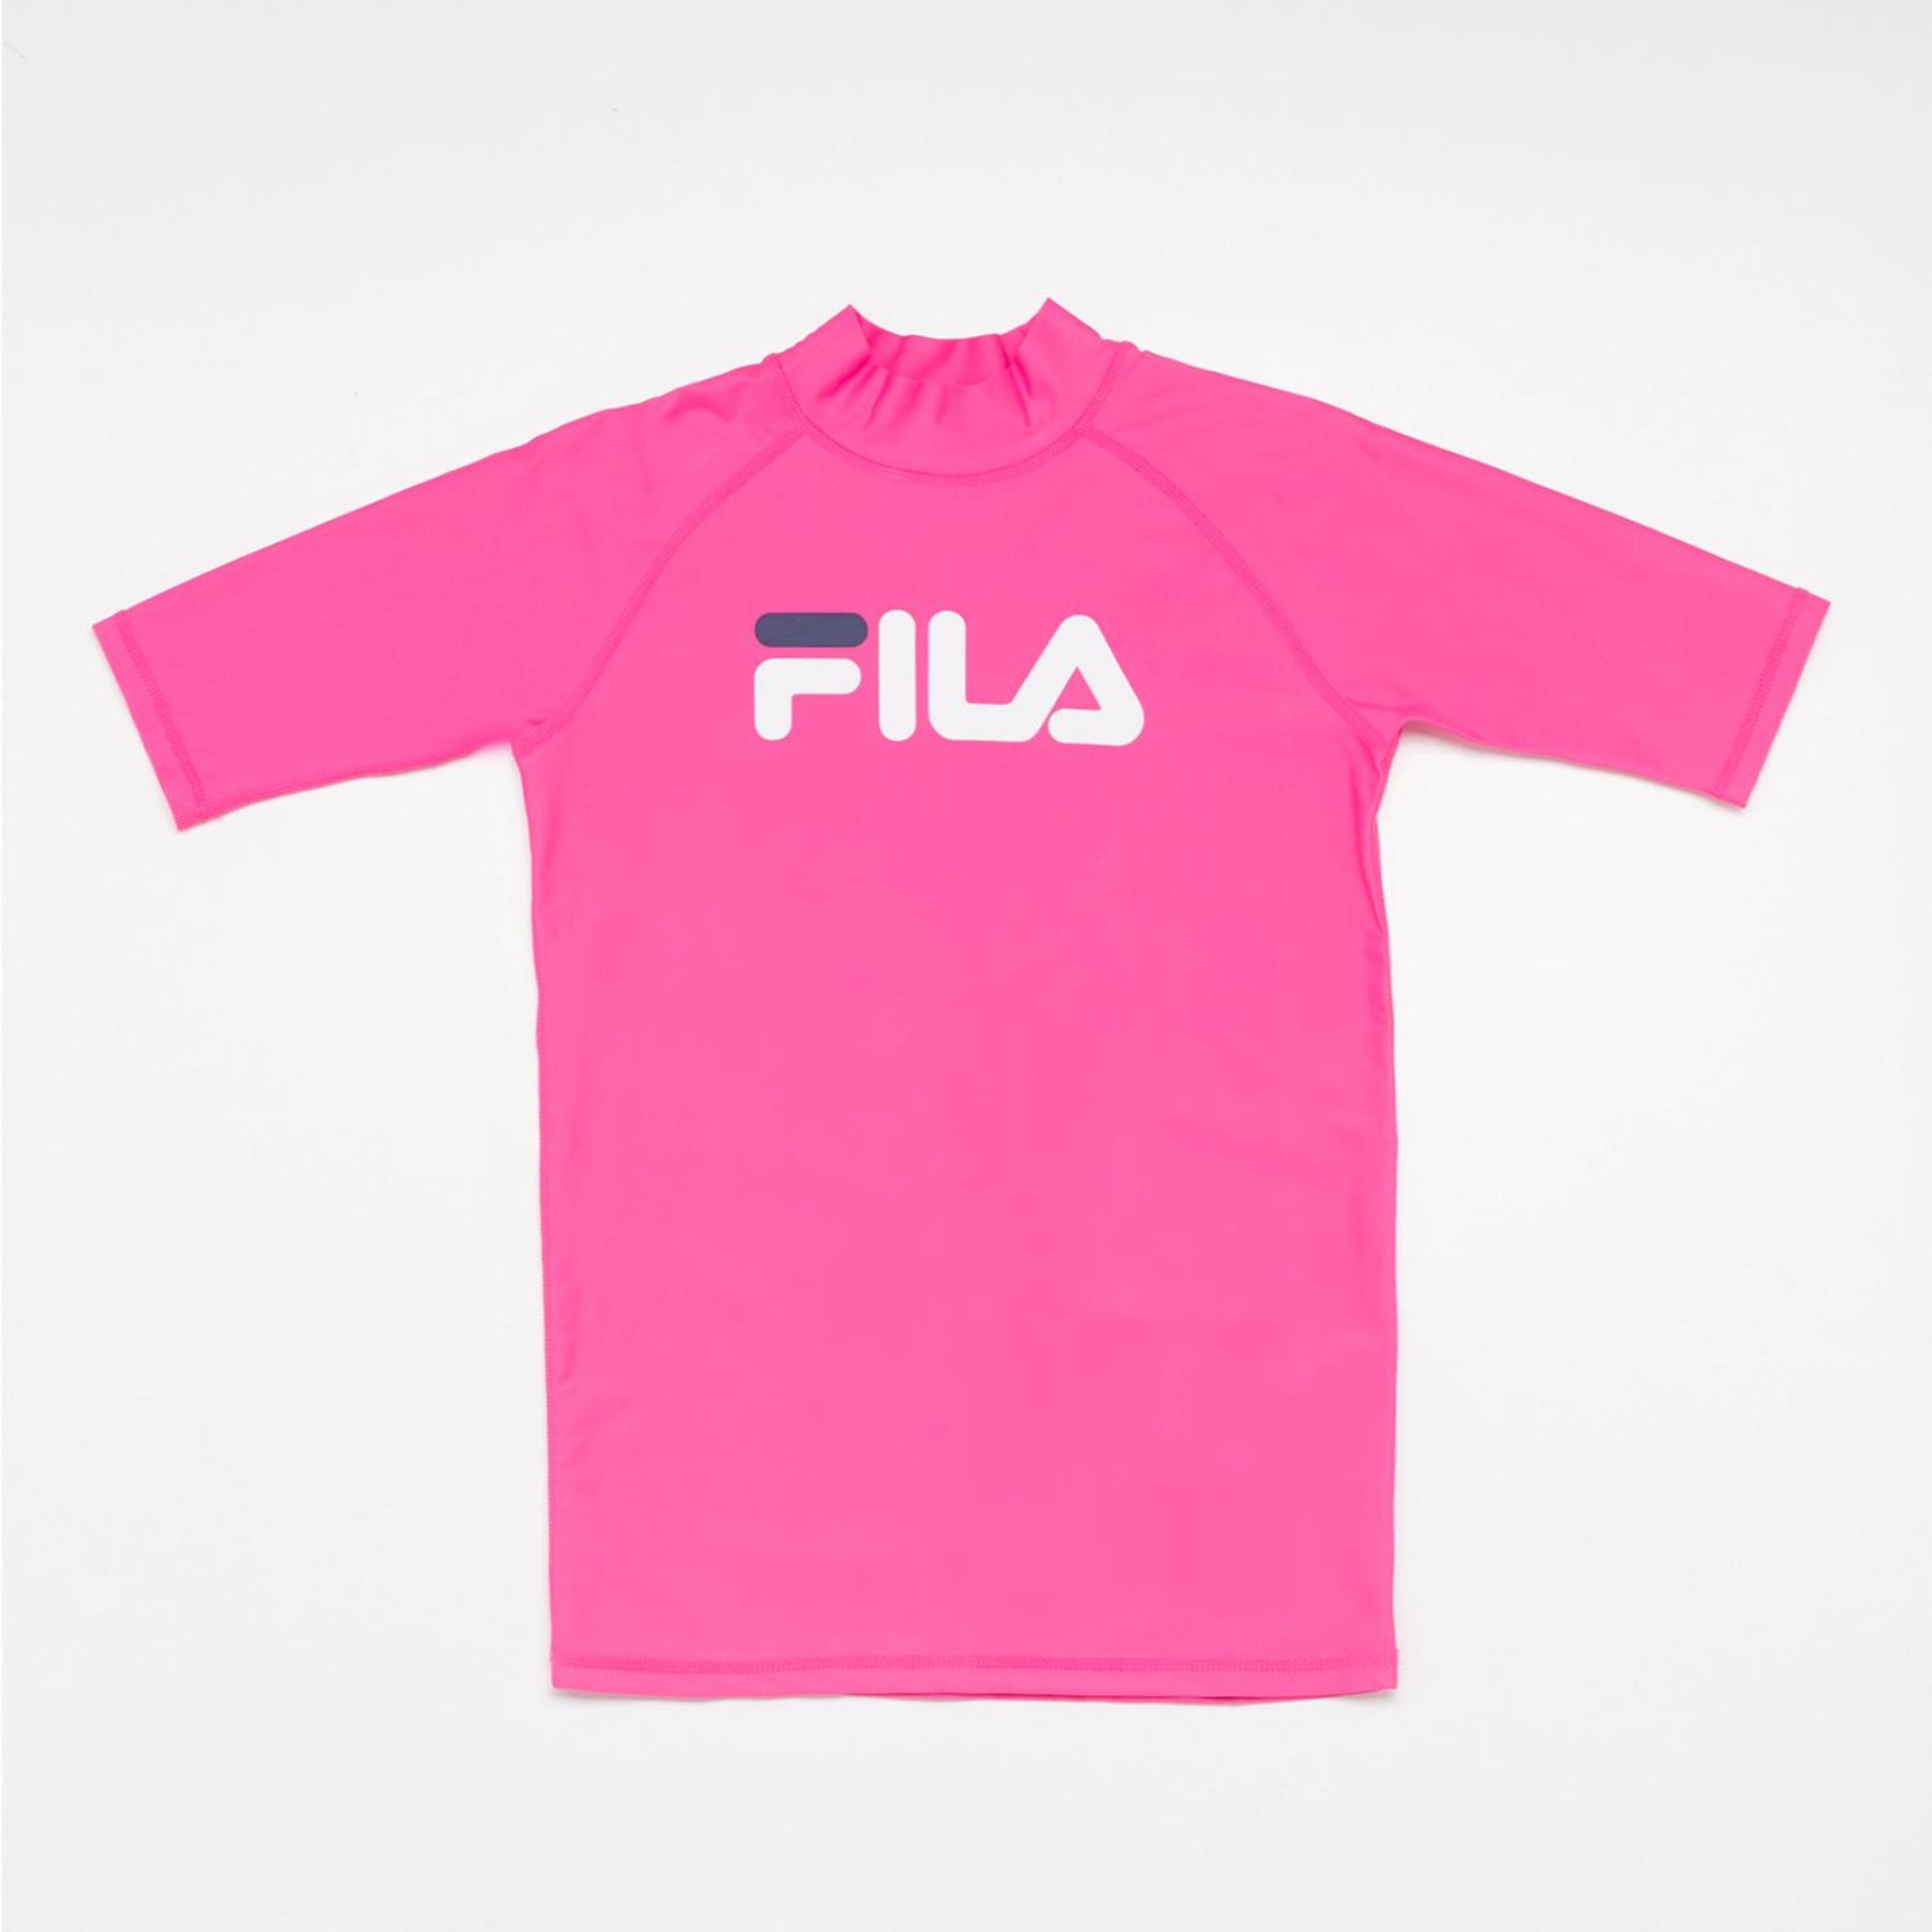 Fila Surf - rosa - Camiseta Surf Chico